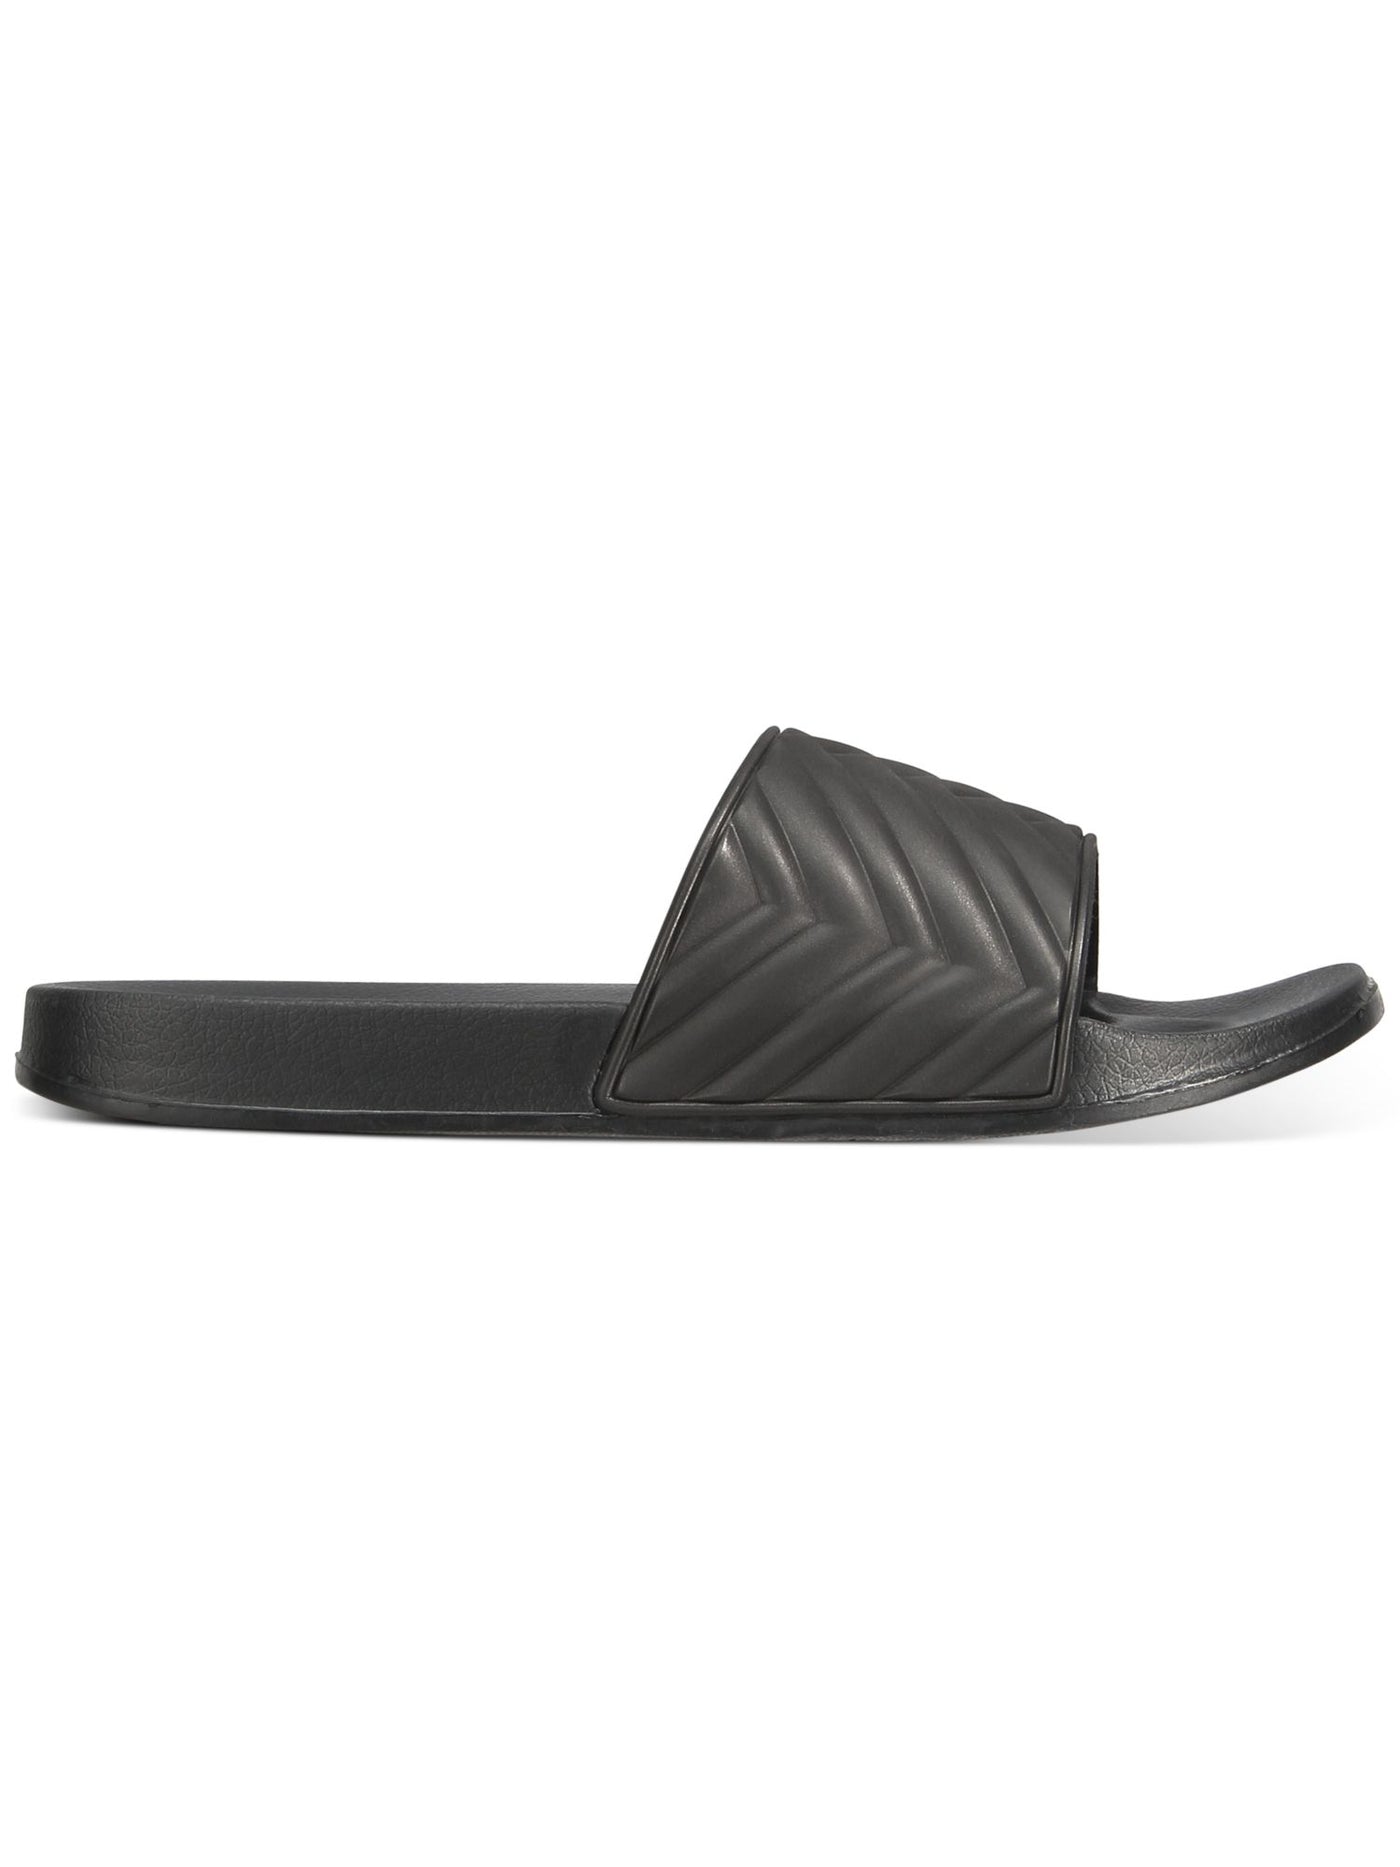 INC Mens Black Quilted Xander Open Toe Slip On Slide Sandals Shoes 11 M